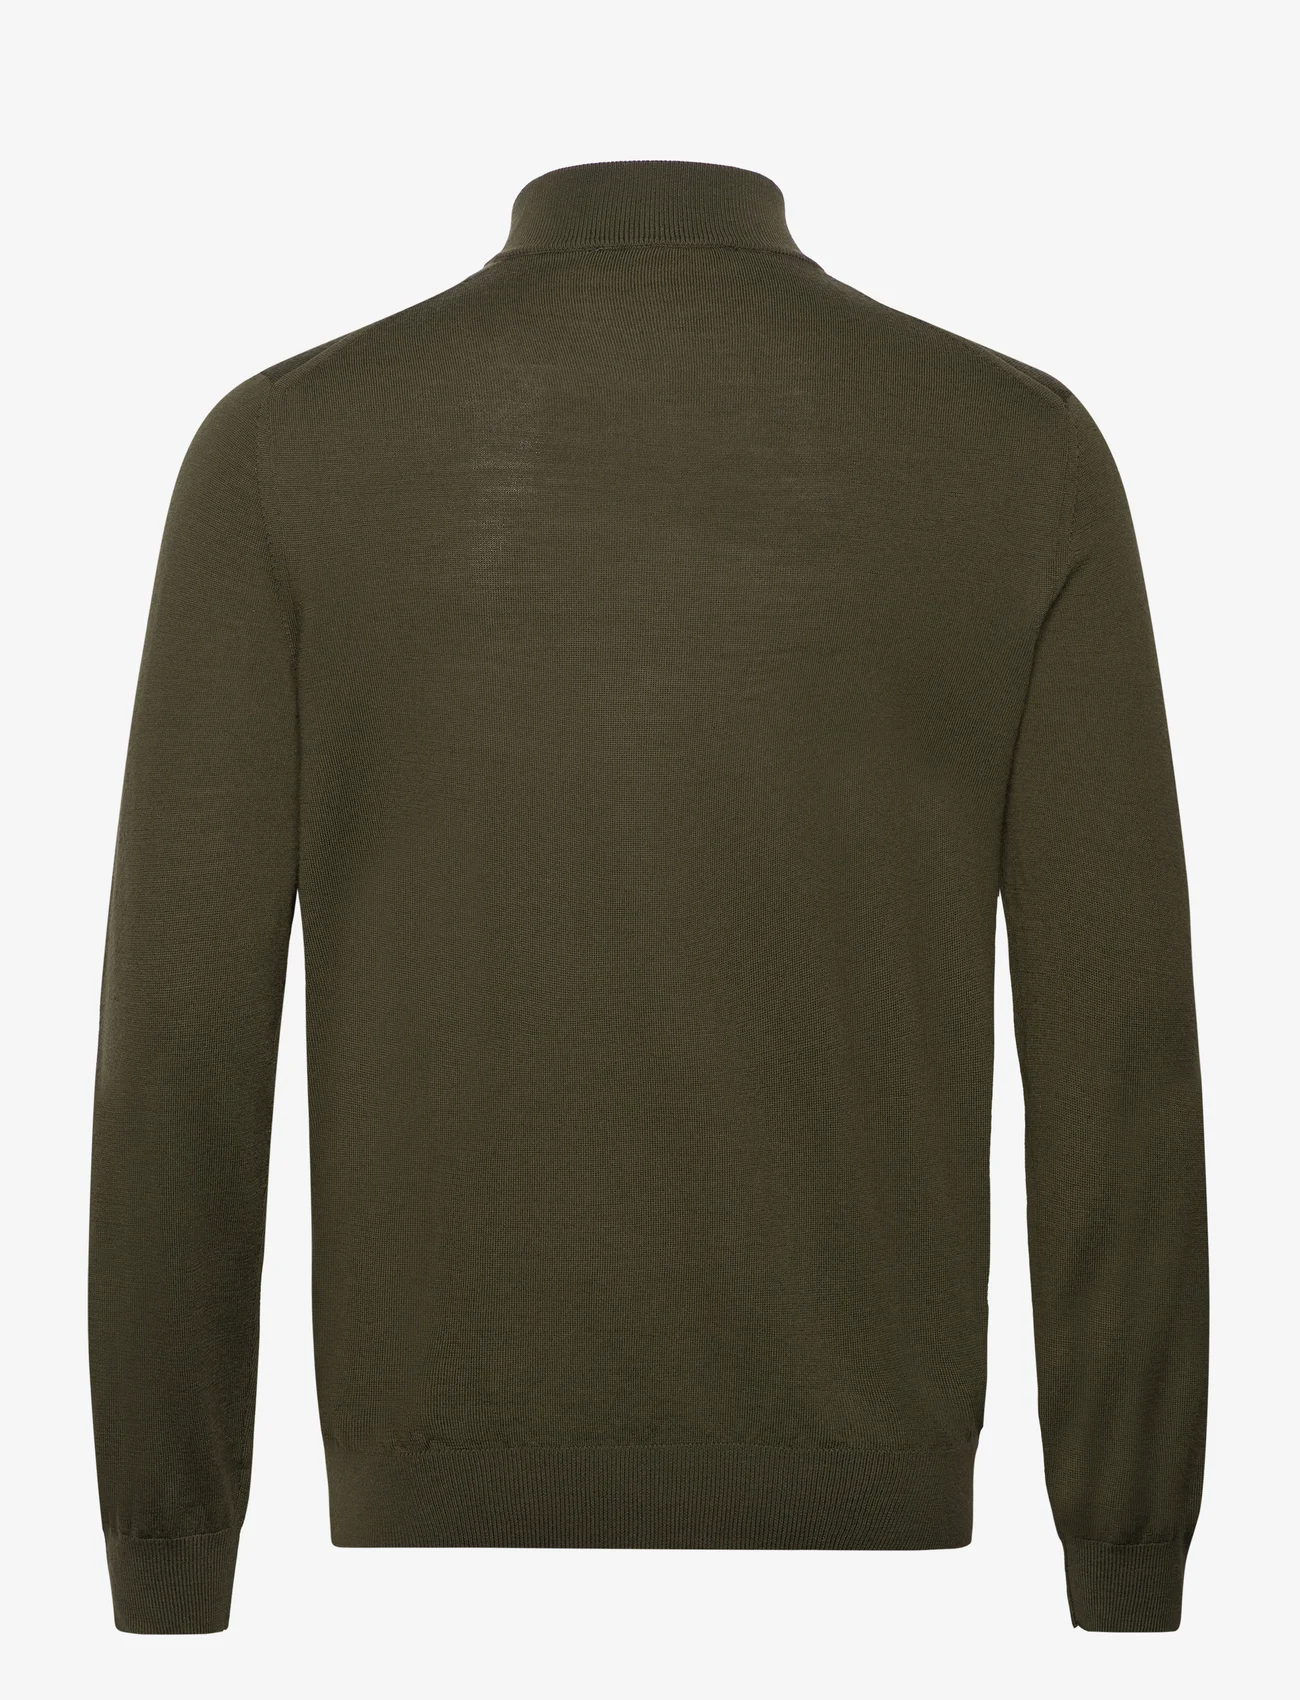 Mango - 100% merino wool sweater with zip collar - menn - beige - khaki - 1